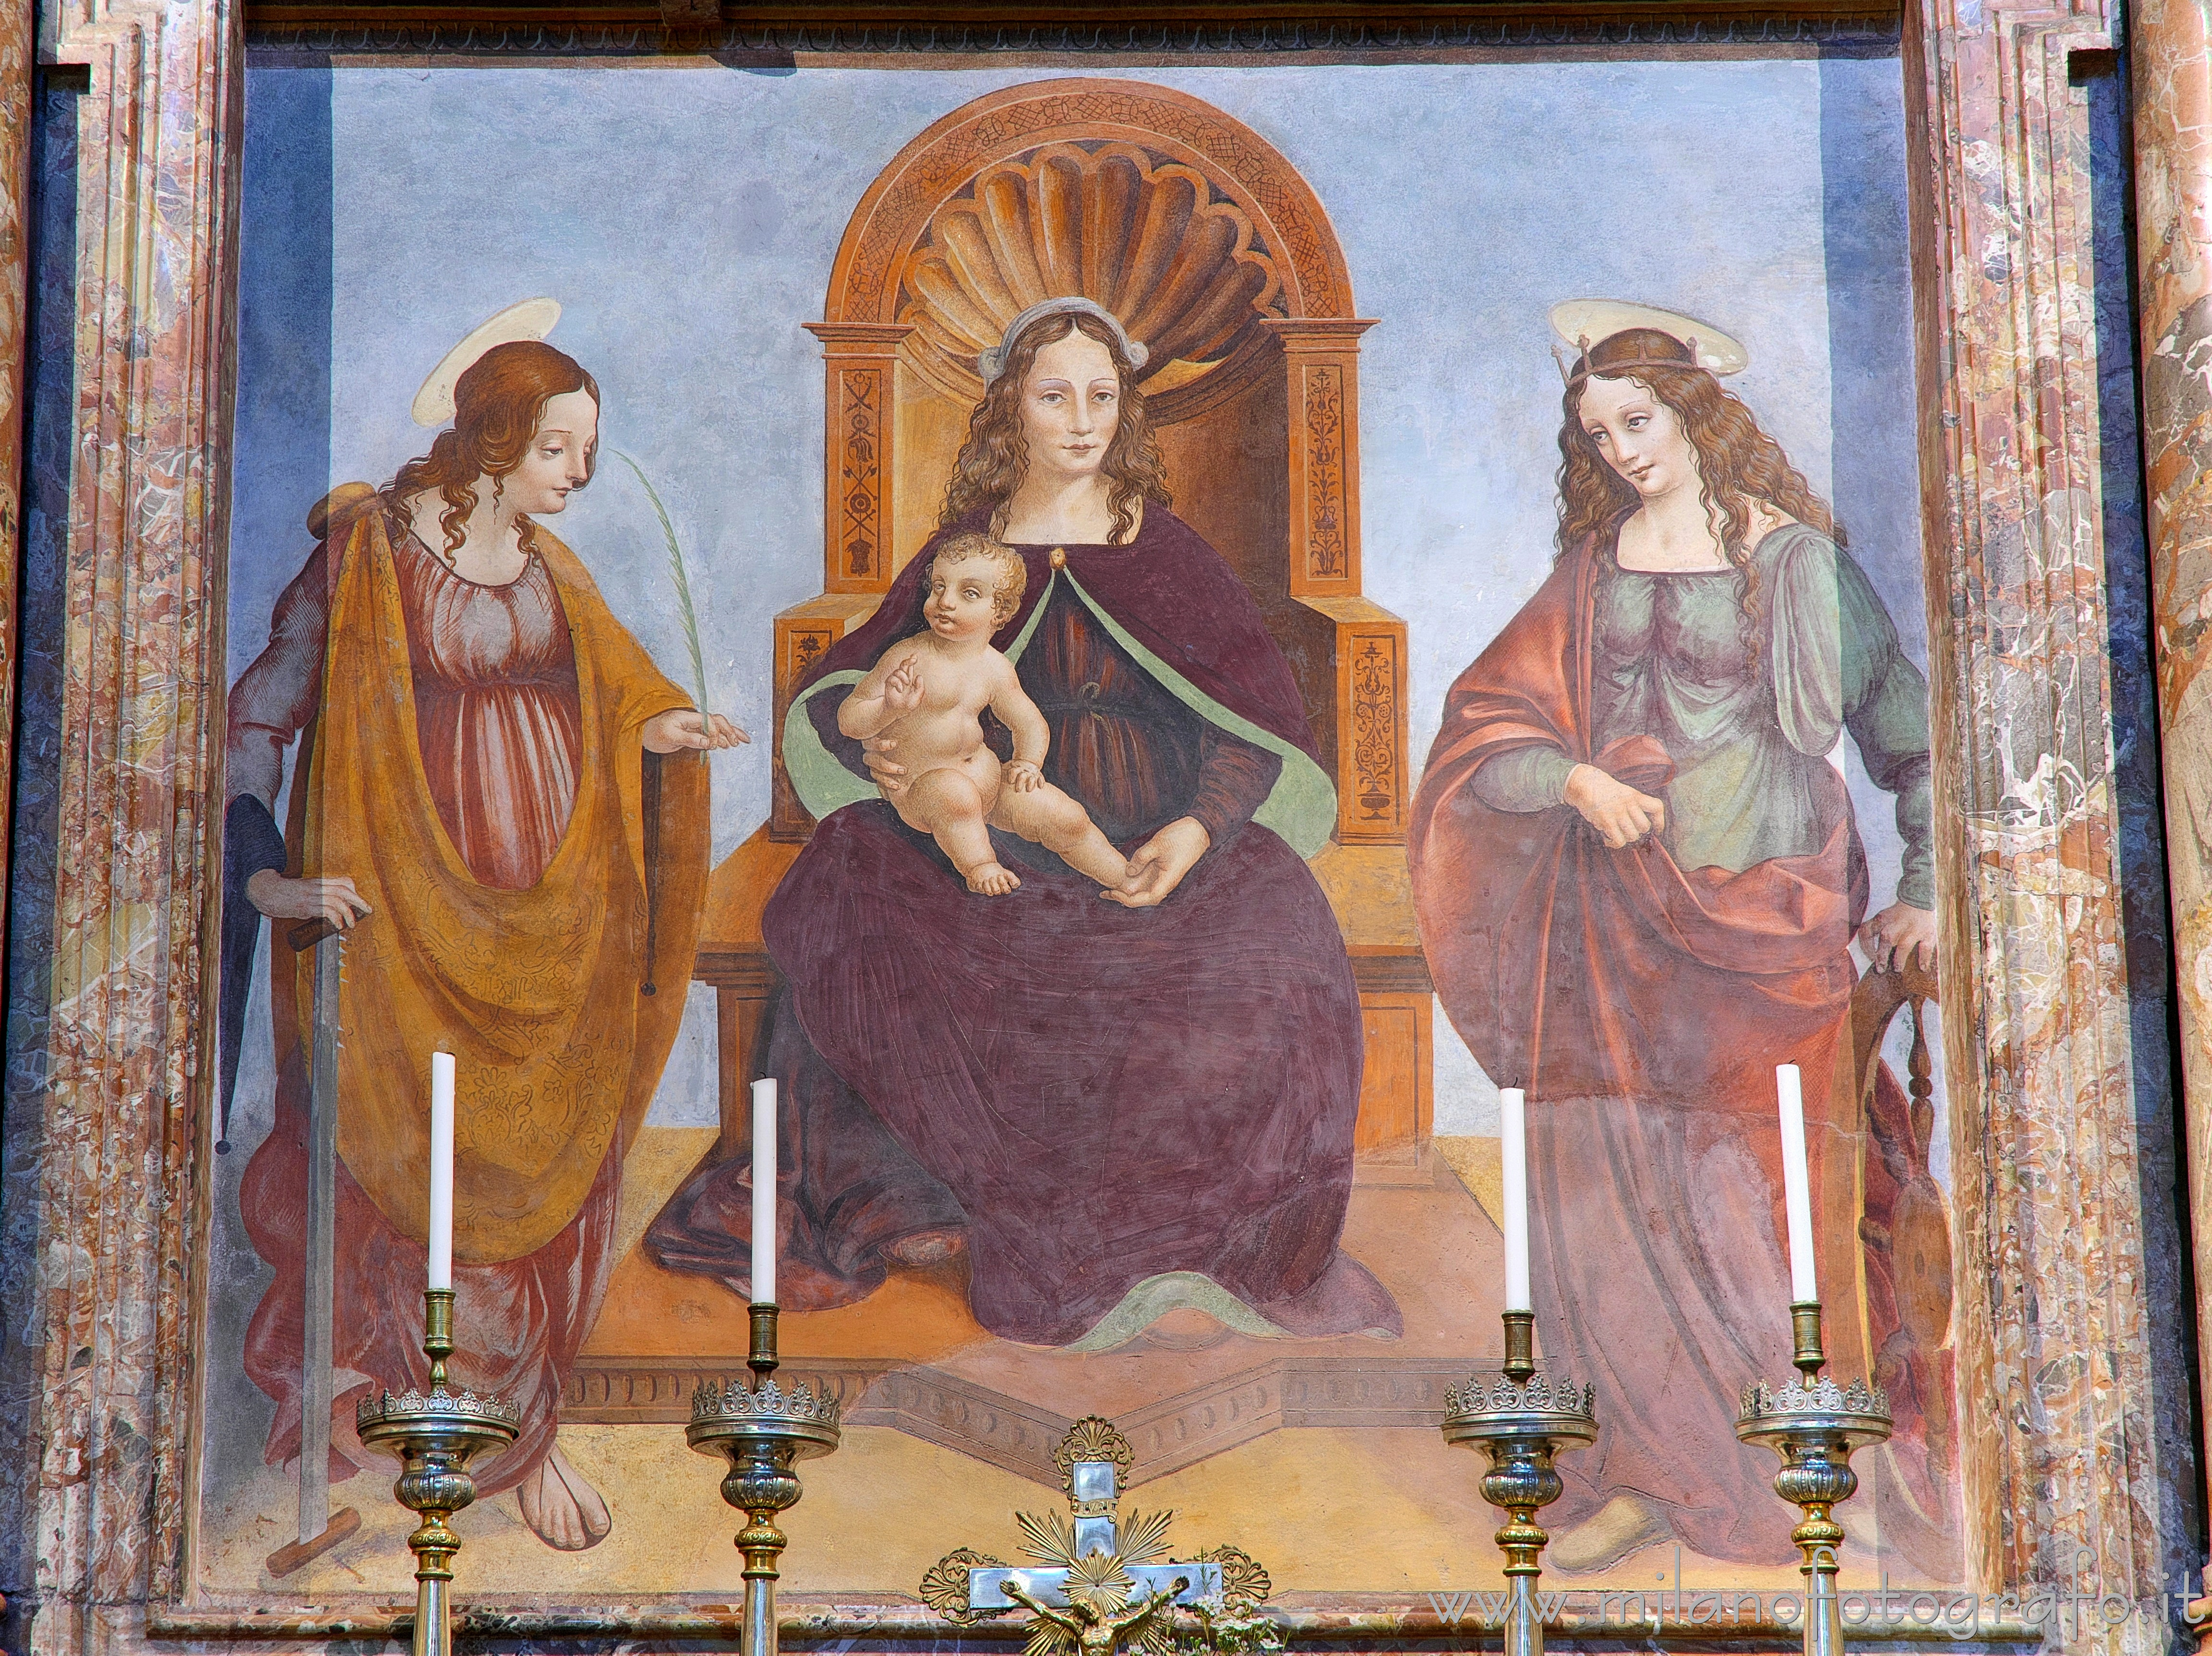 Oggiono (Lecco, Italy): Virgin with Child and saints by Marco d'Oggiono in the Church of Sant'Eufemia - Oggiono (Lecco, Italy)